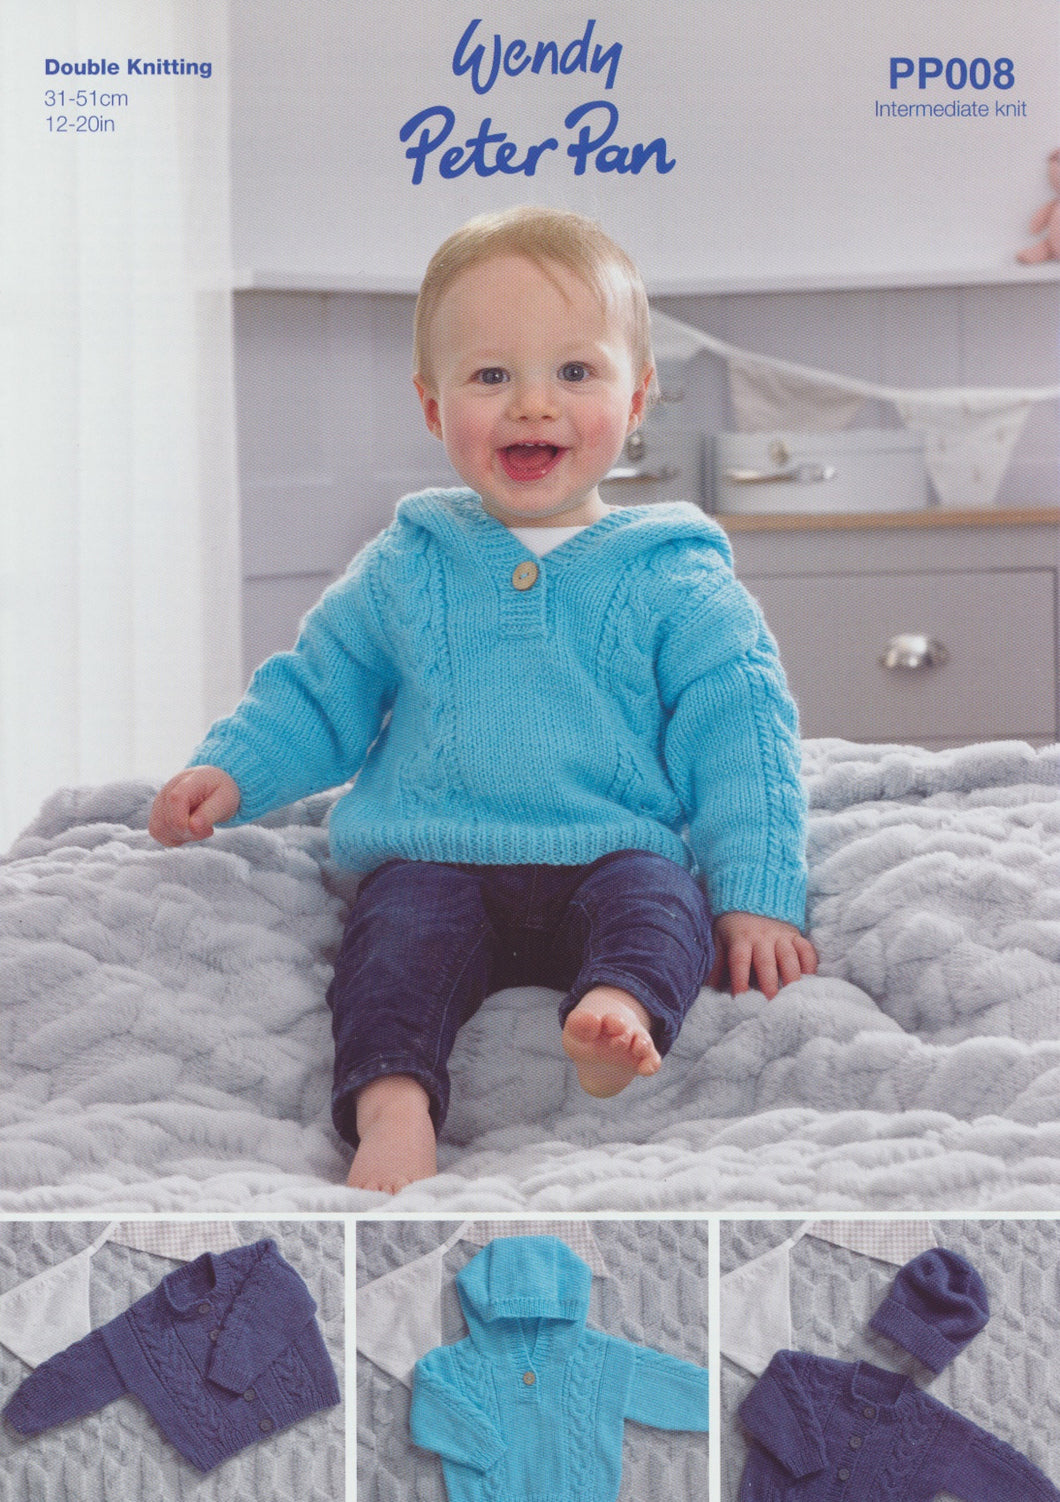 Wendy Peter Pan Baby Double Knitting Pattern - Sweater Cardigan & Hat (PP008)